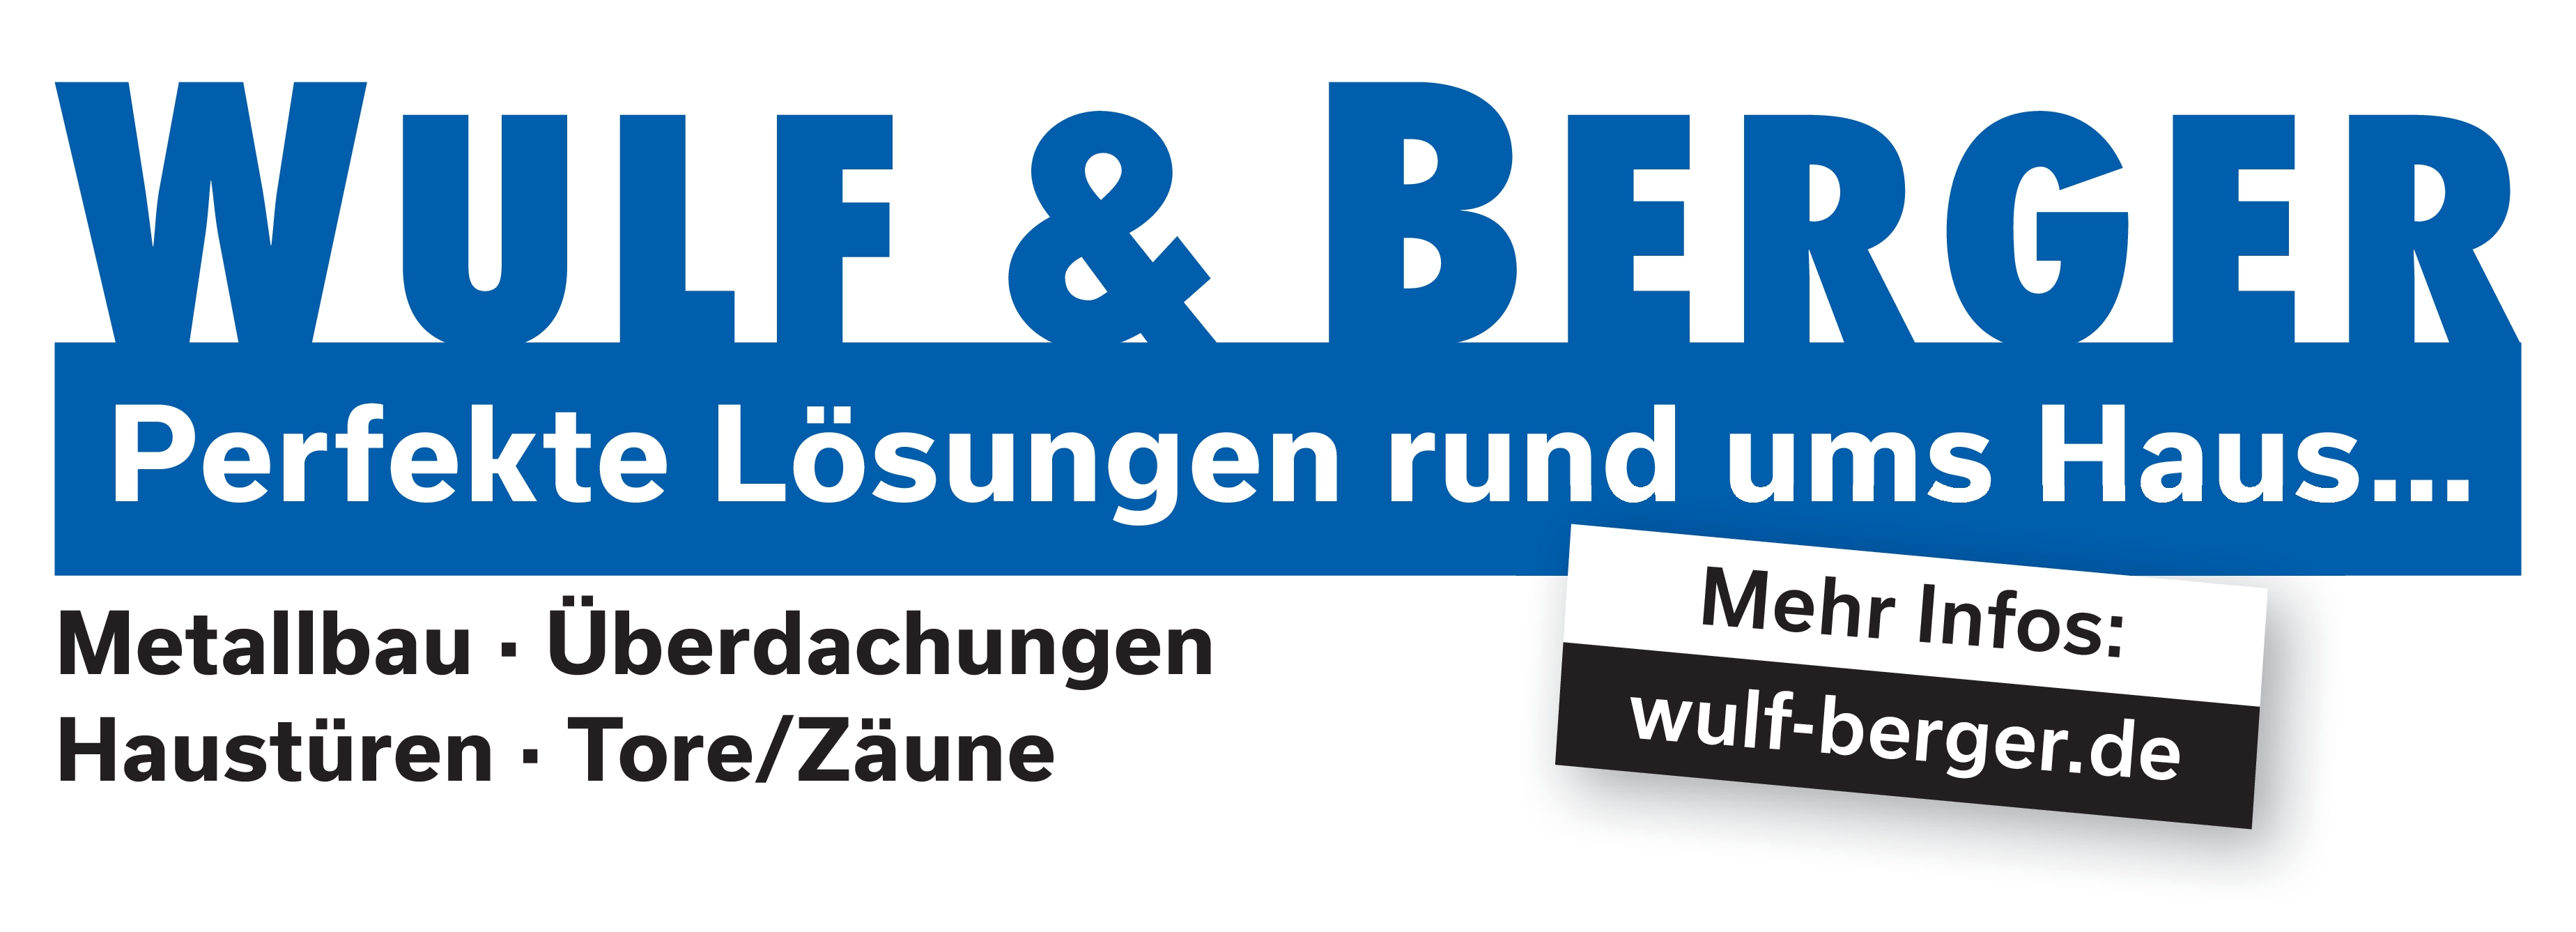 Wulf & Berger